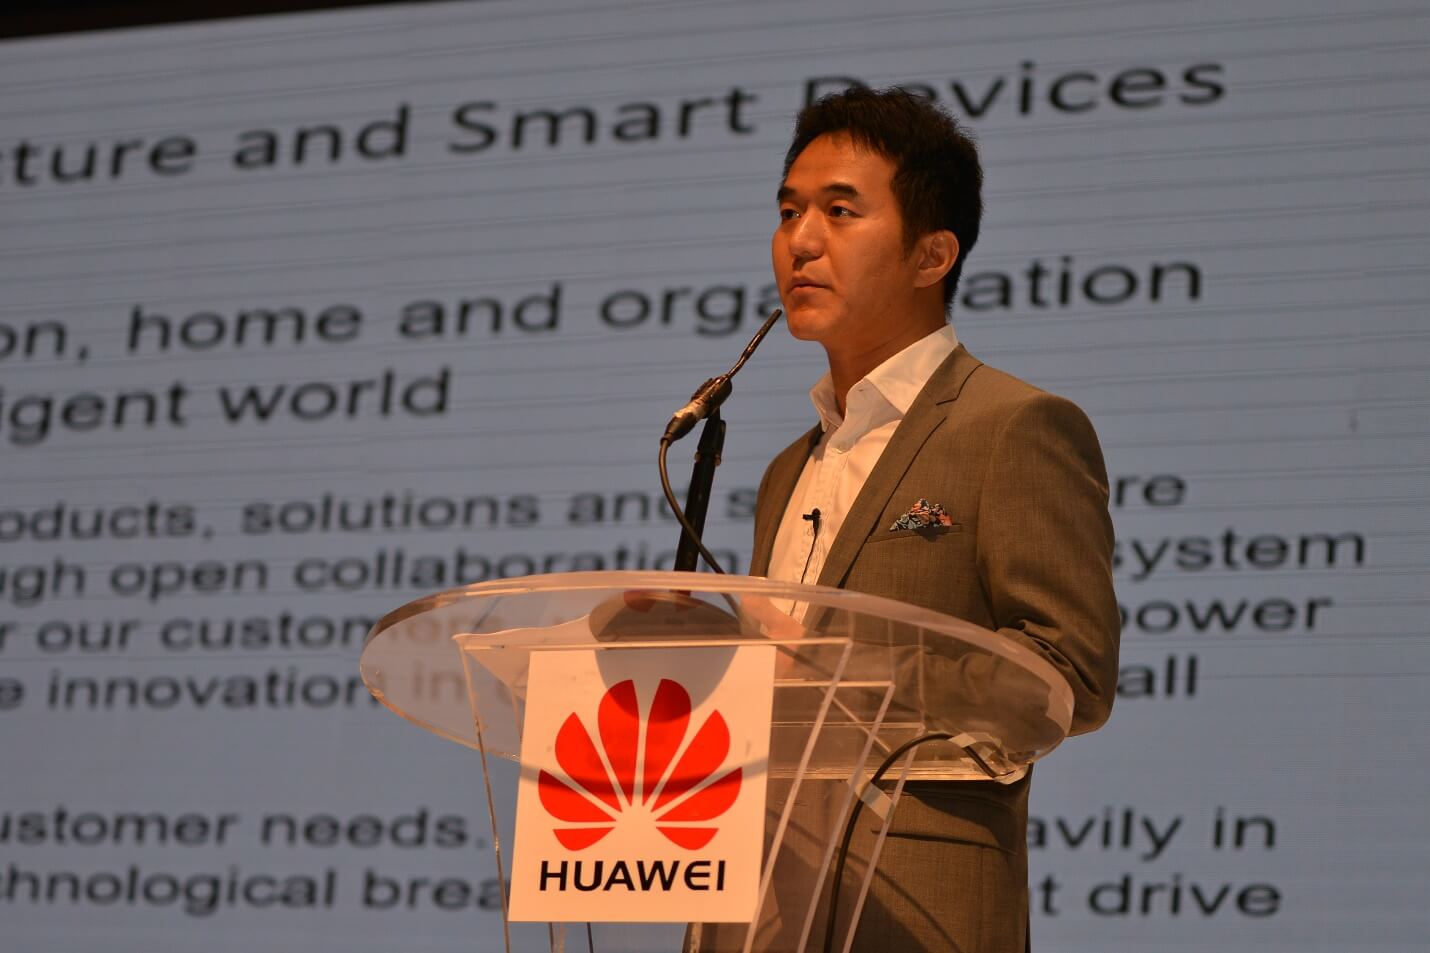 Africana Entrepreneur - Huawei CEO, Mr. Tank Li